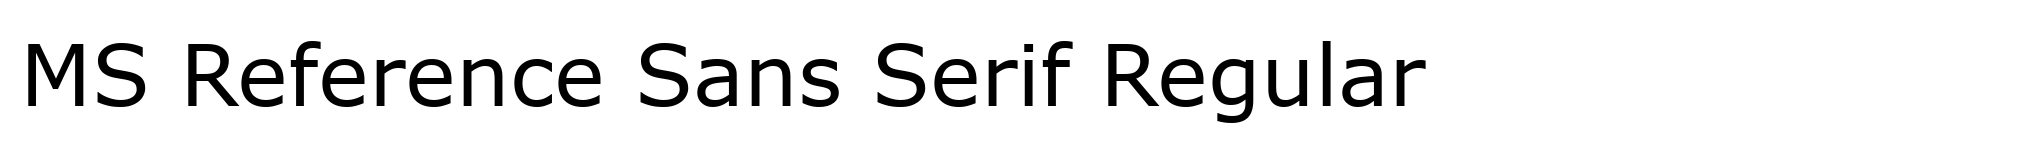 MS Reference Sans Serif Regular image